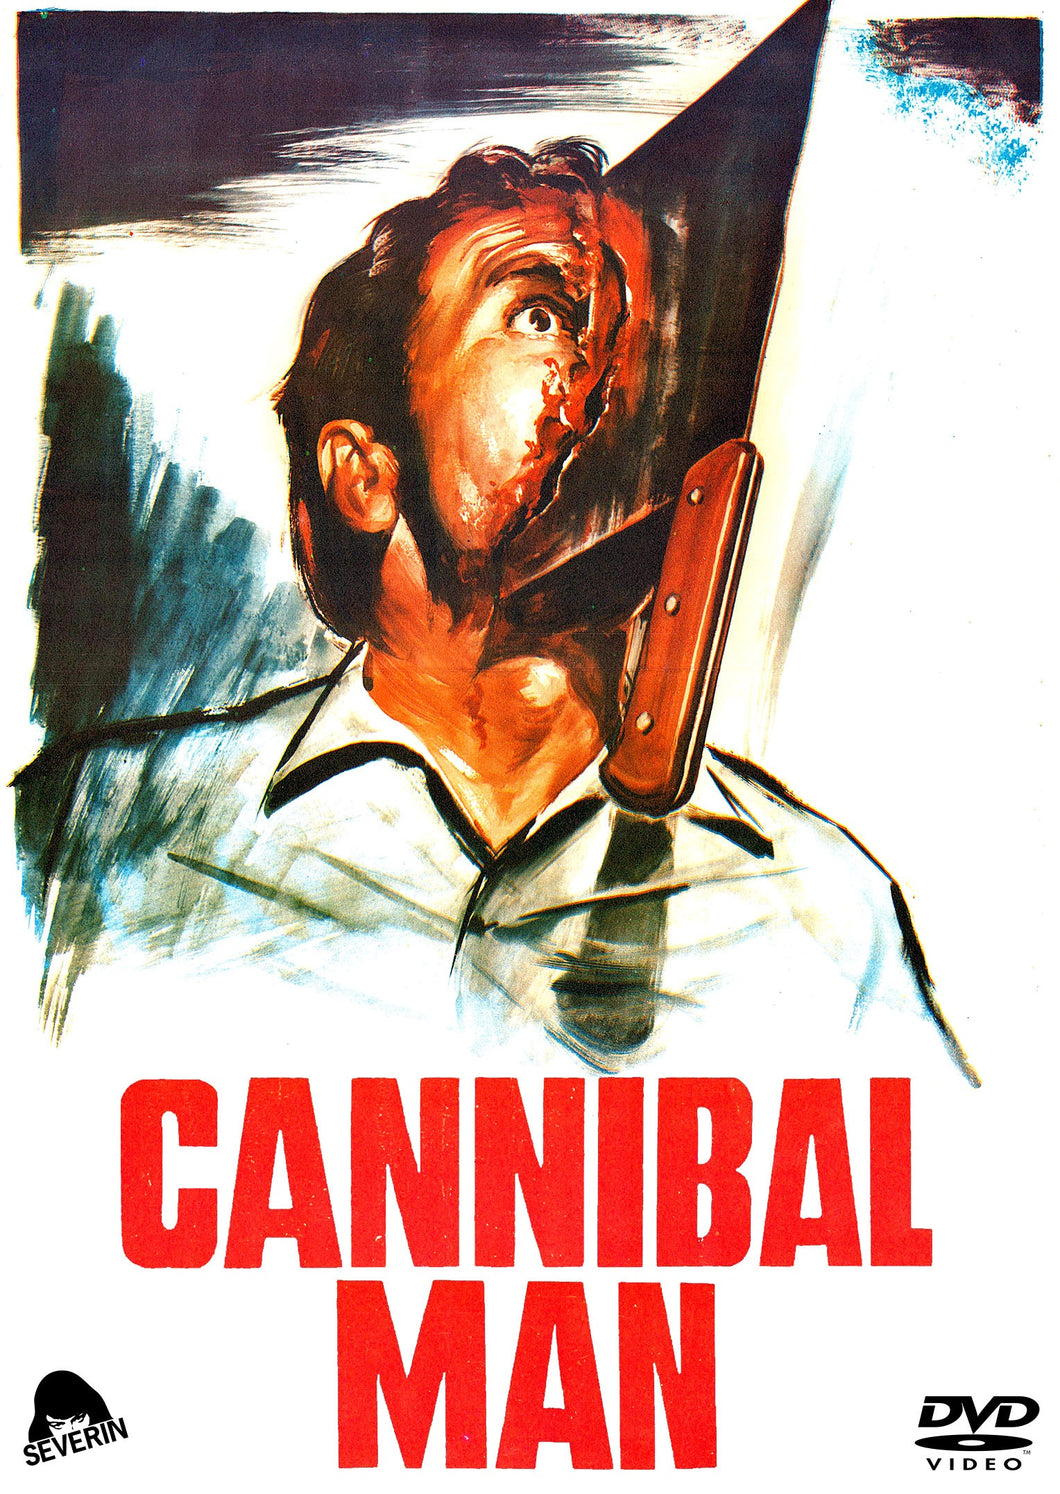 The Cannibal Man (DVD)